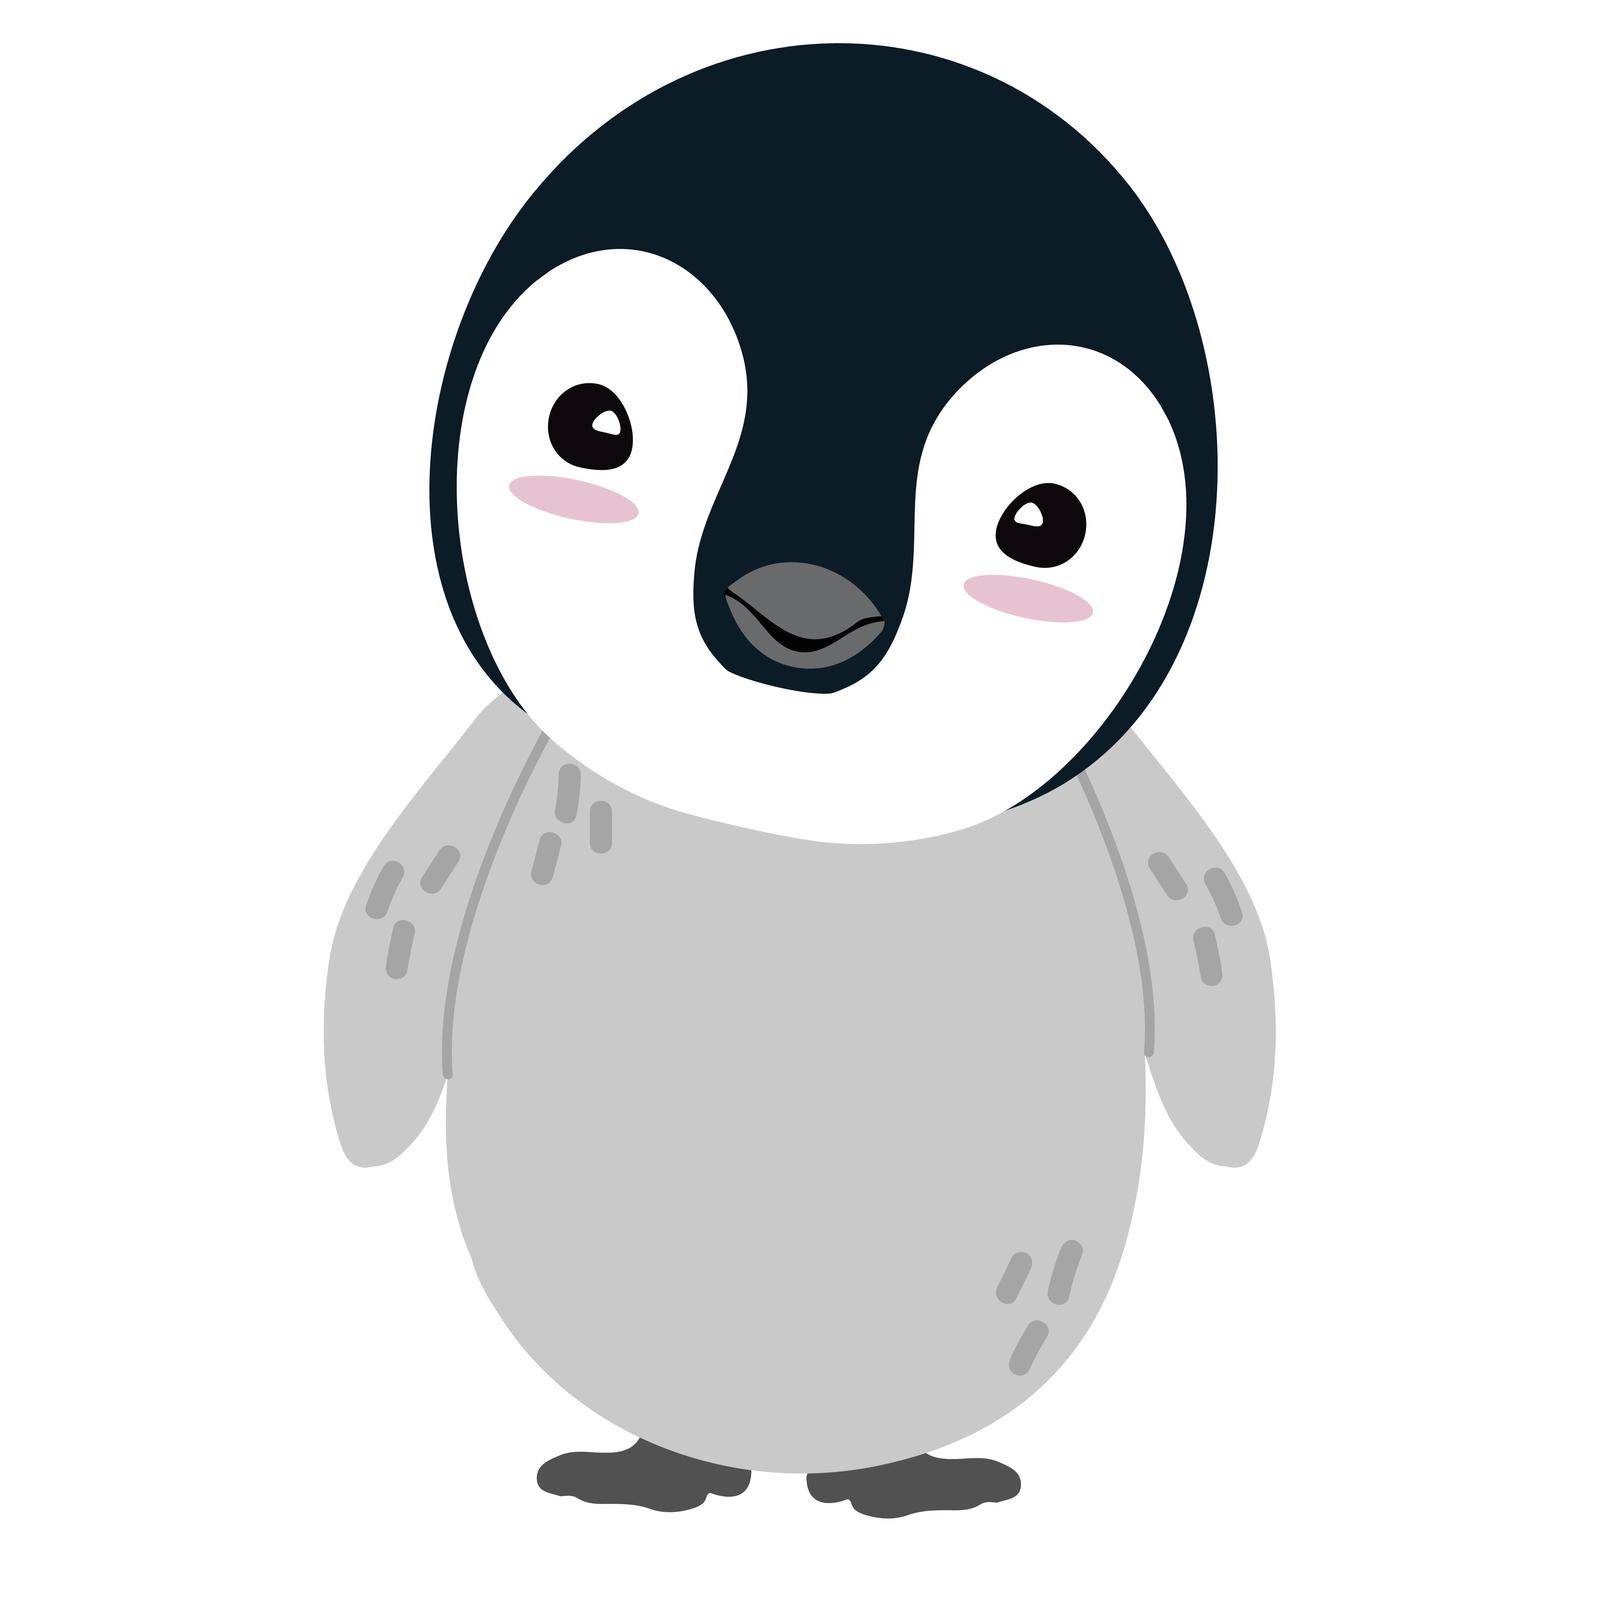 Cute chick Penguin cartoon flat by focus_bell